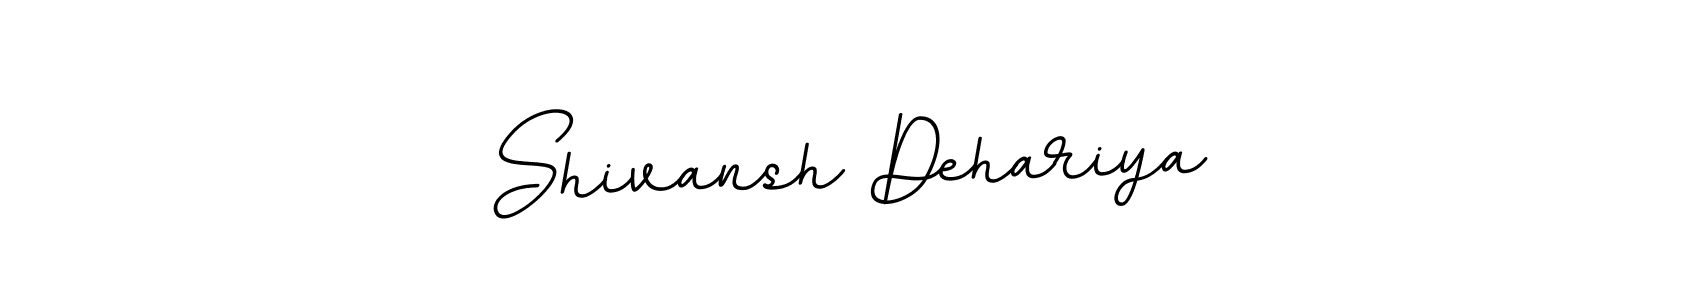 How to Draw Shivansh Dehariya signature style? BallpointsItalic-DORy9 is a latest design signature styles for name Shivansh Dehariya. Shivansh Dehariya signature style 11 images and pictures png